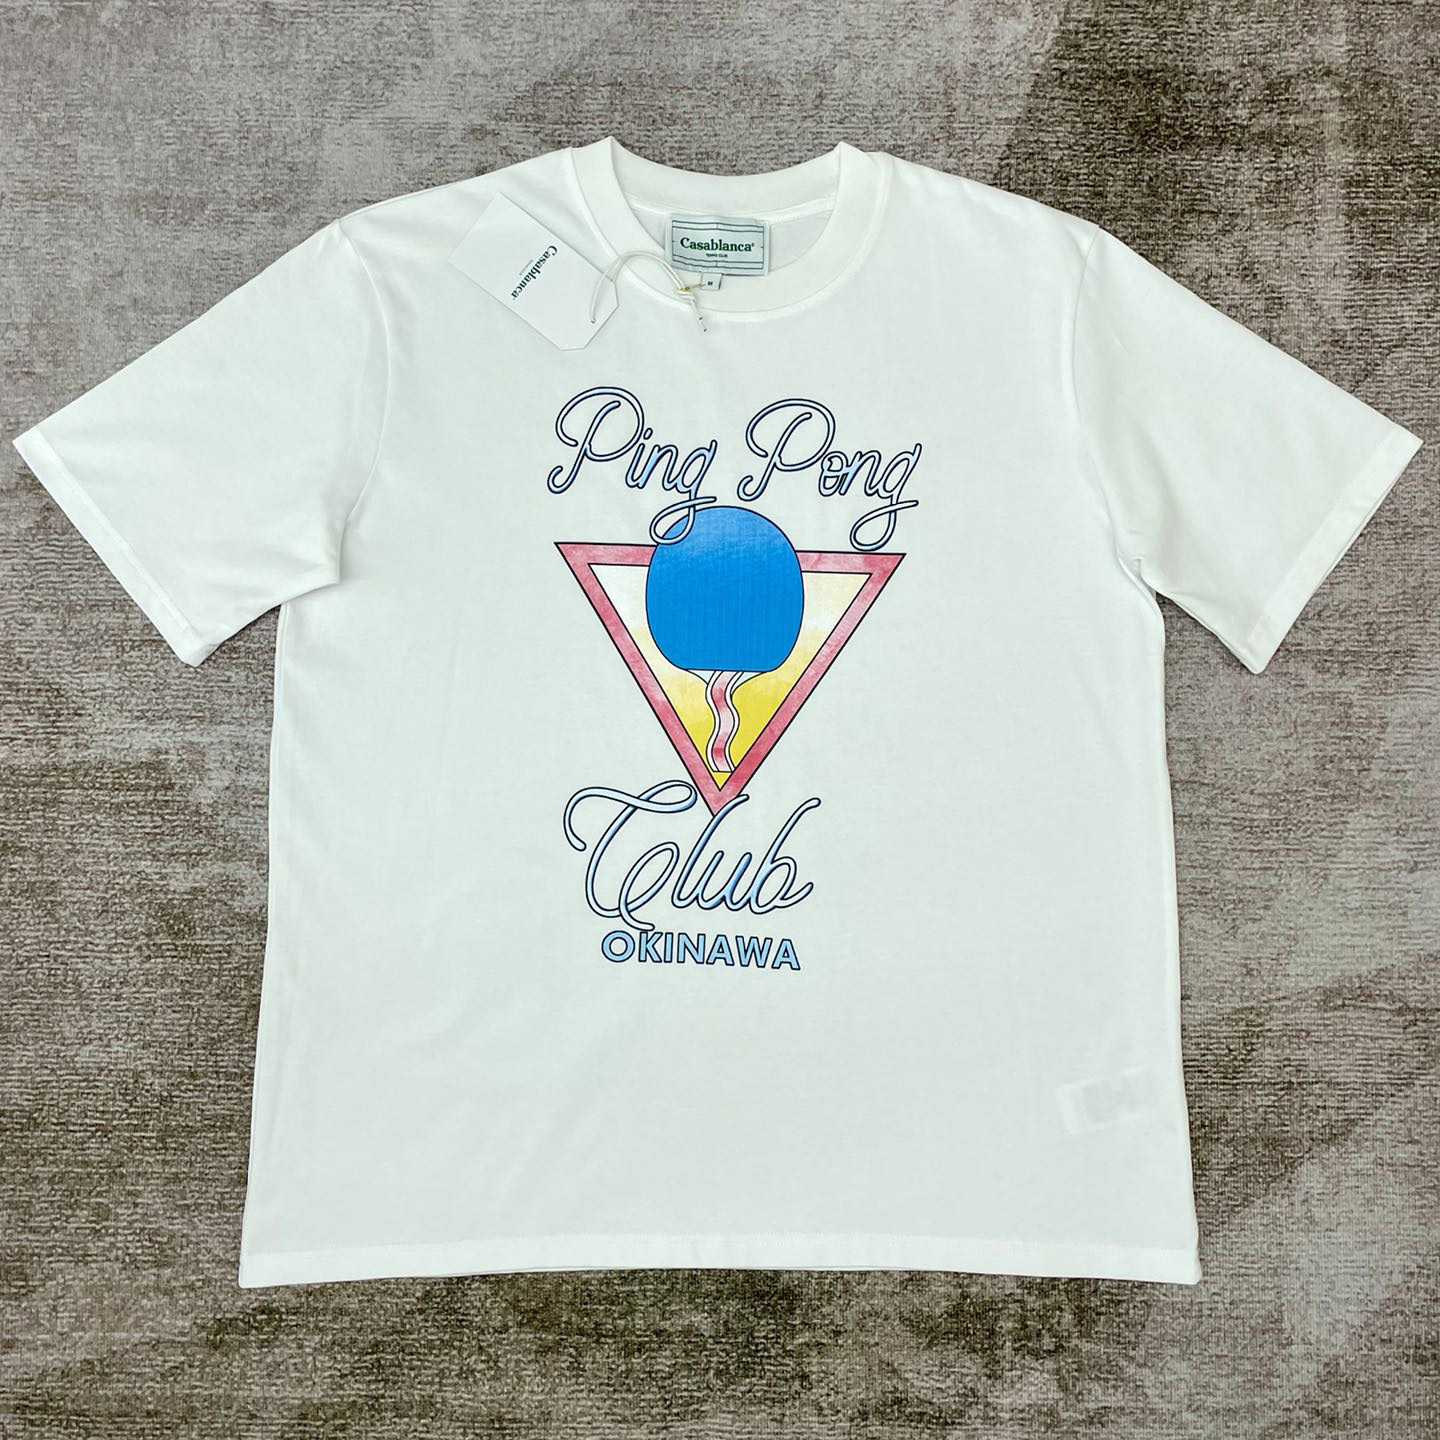 Casablanca Ping Pong Club Okinawa T-shirt - DesignerGu